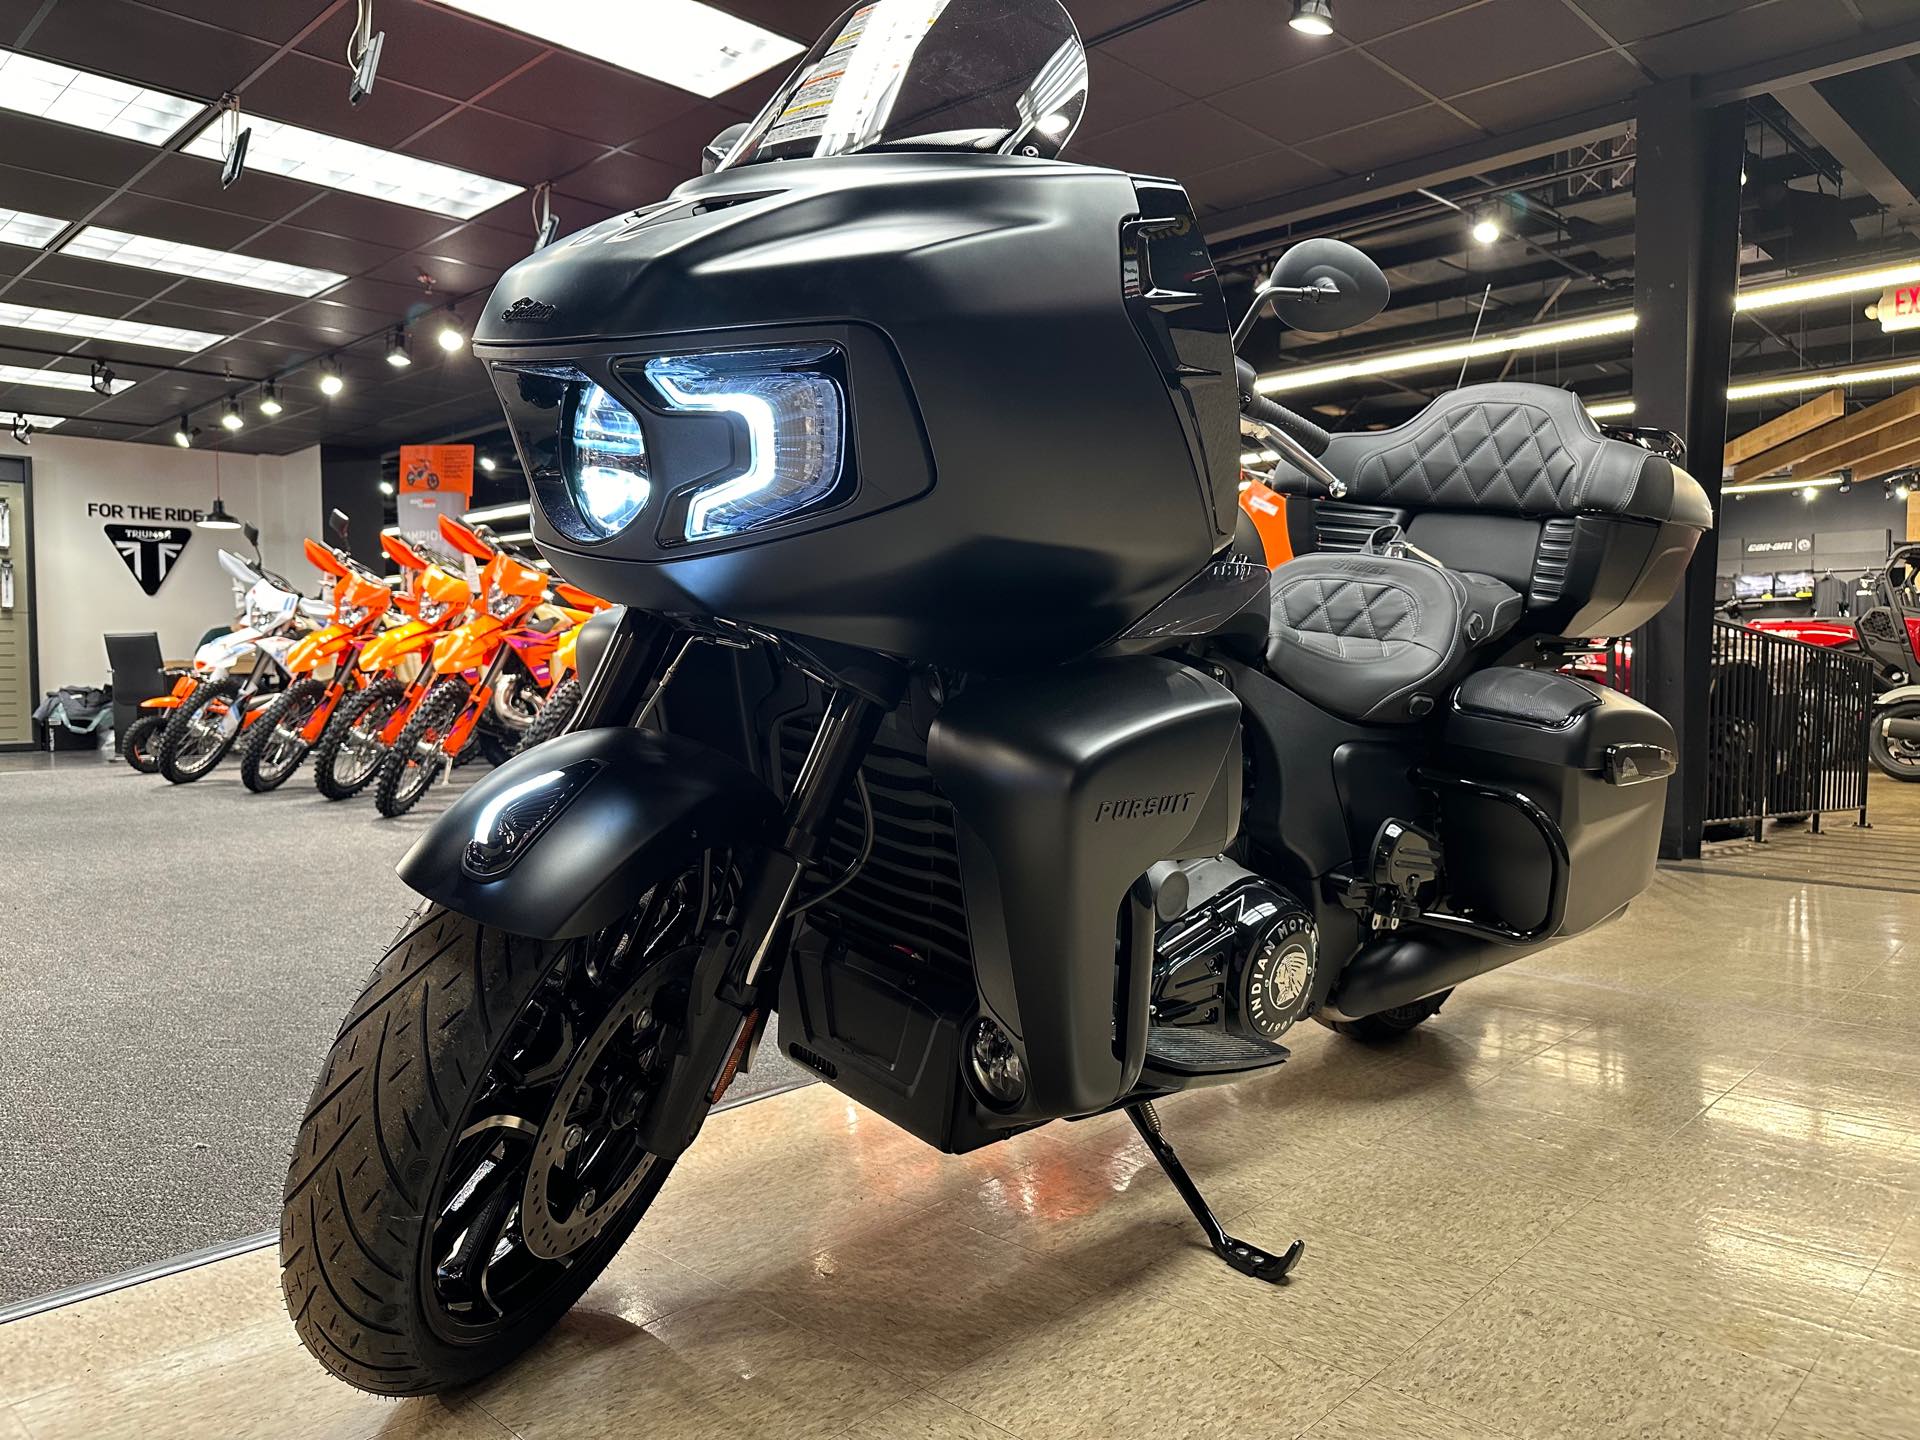 2024 Indian Motorcycle Pursuit Dark Horse at Sloans Motorcycle ATV, Murfreesboro, TN, 37129